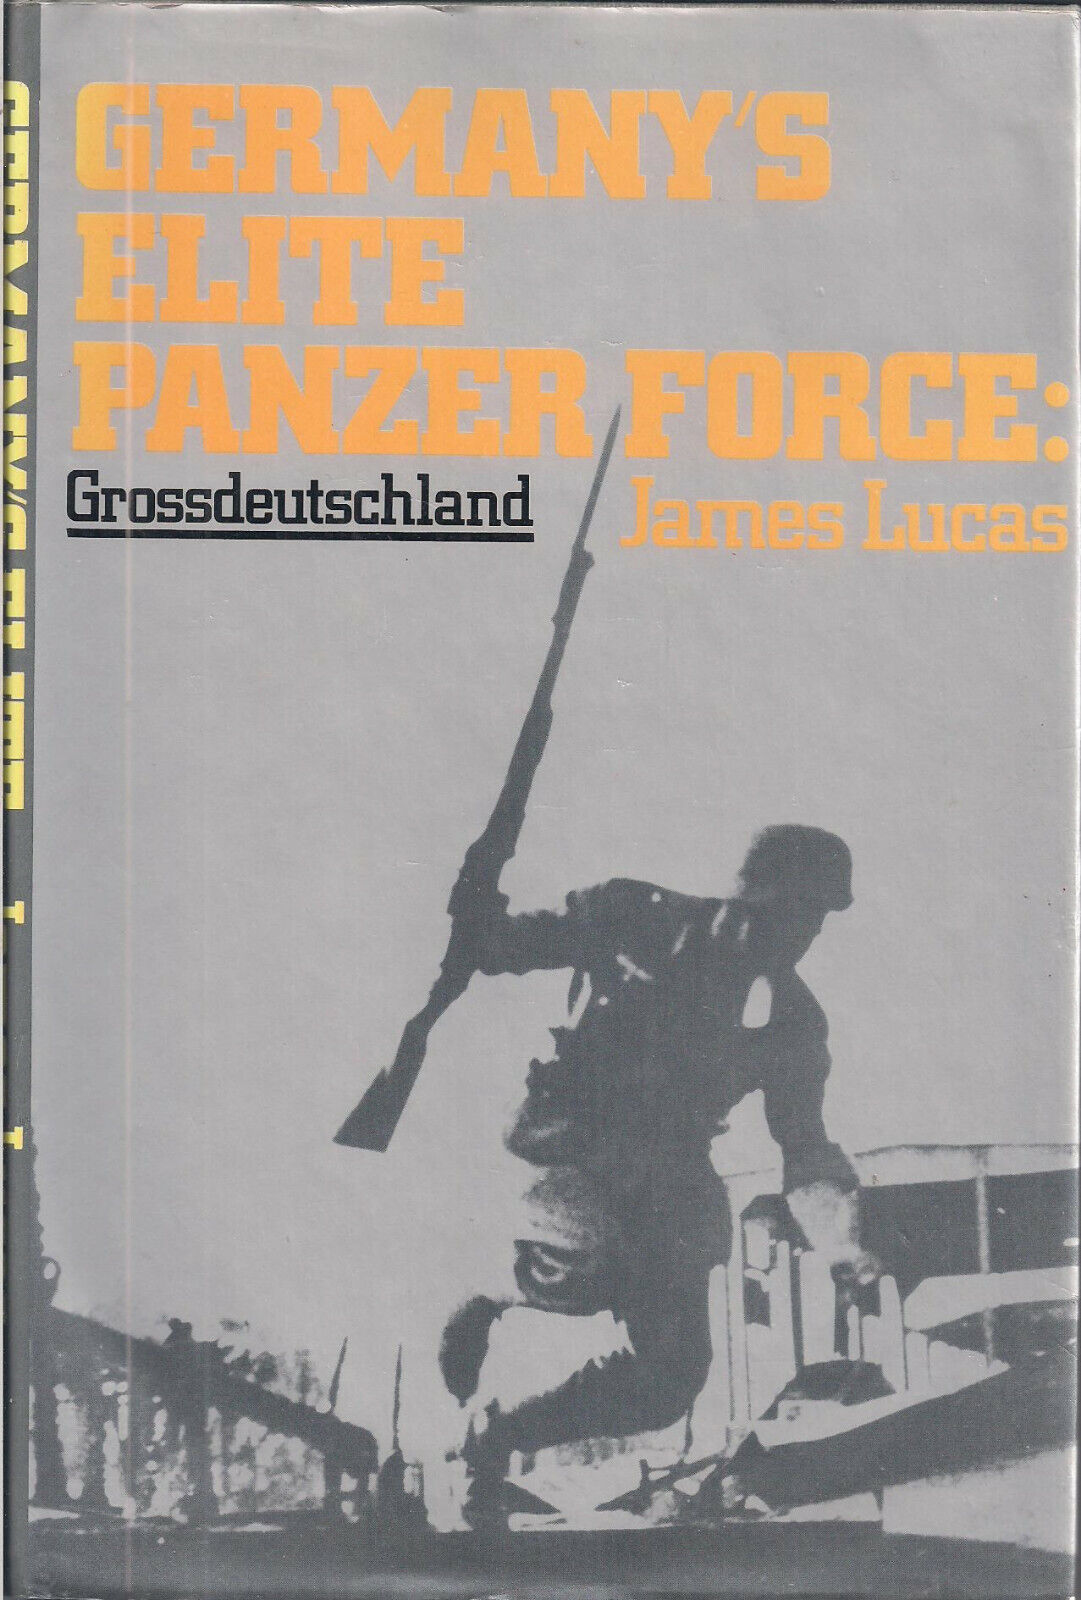 Germany's Elite Panzer Force: Grossdeutschland By James Lucas